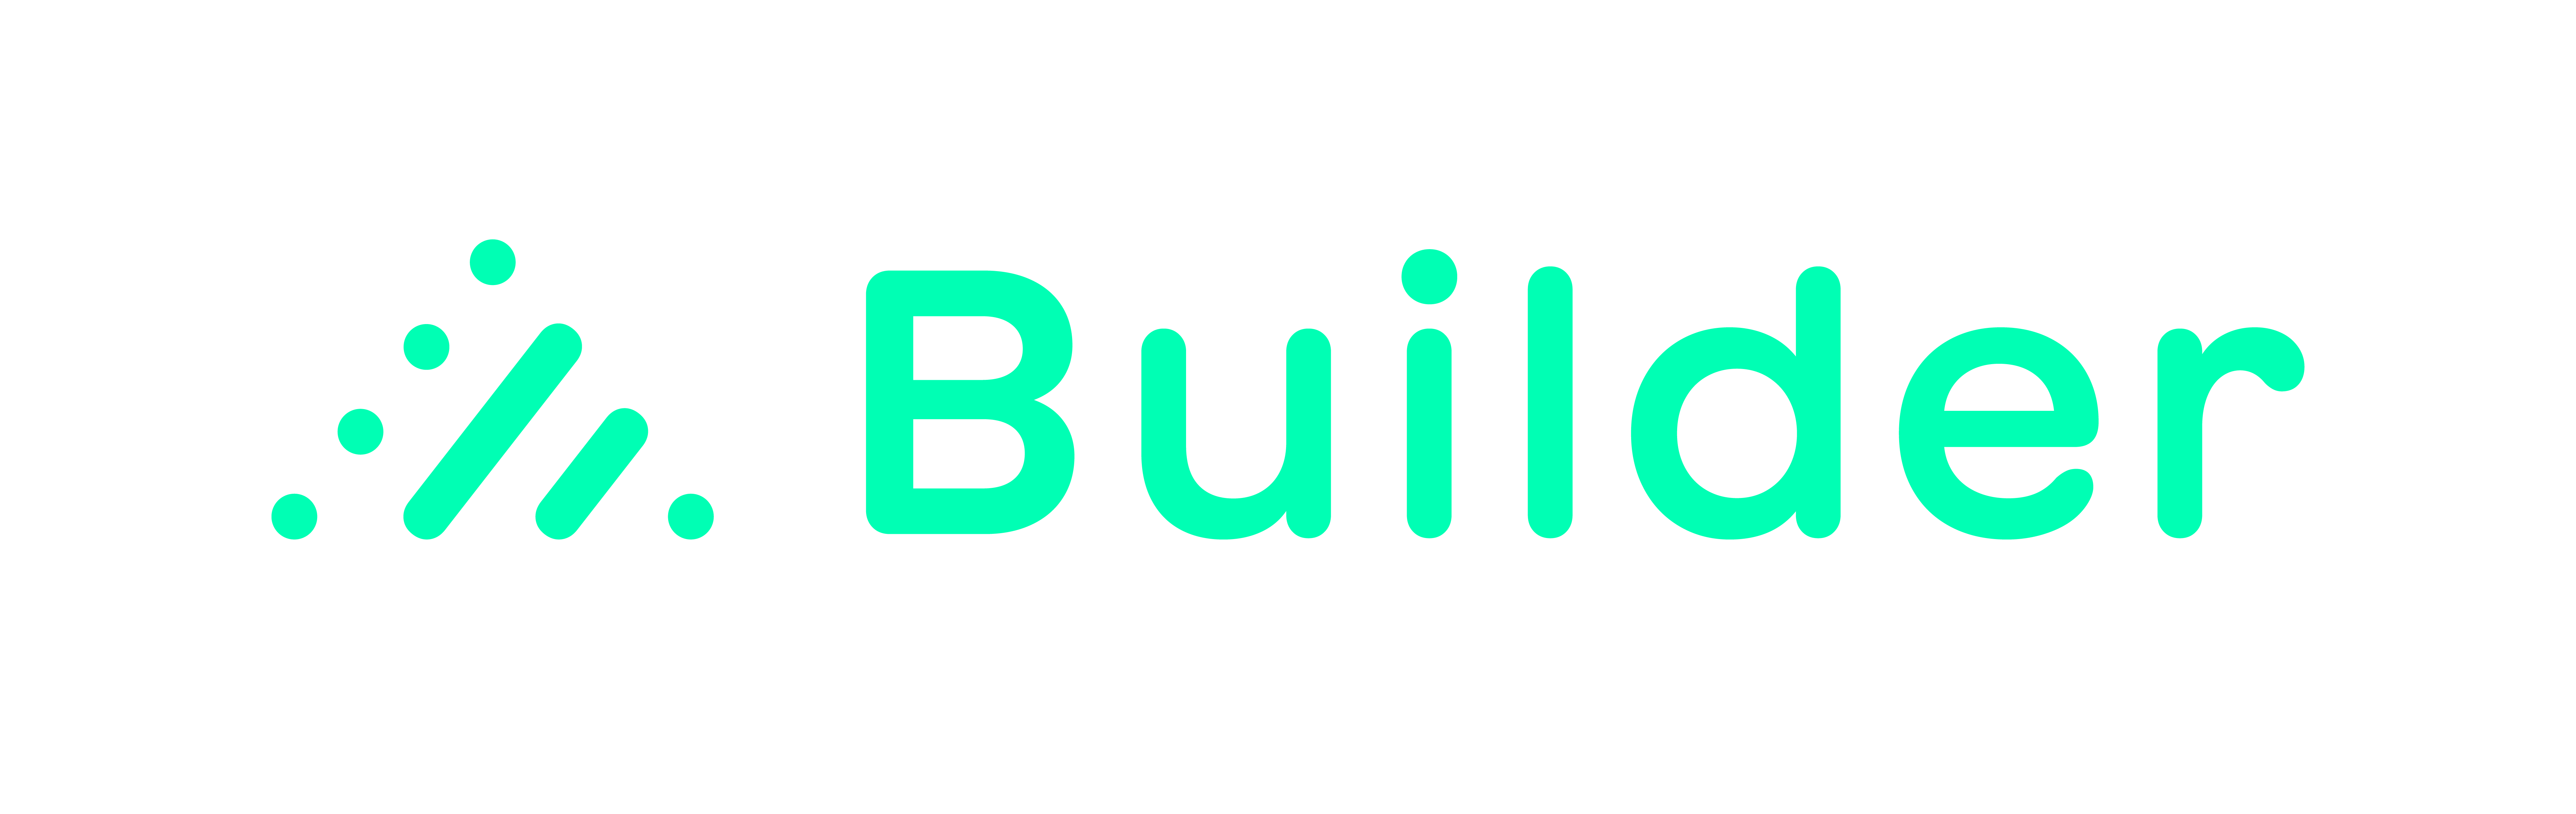 Builder_prisma_wordmark_lightgreen-2